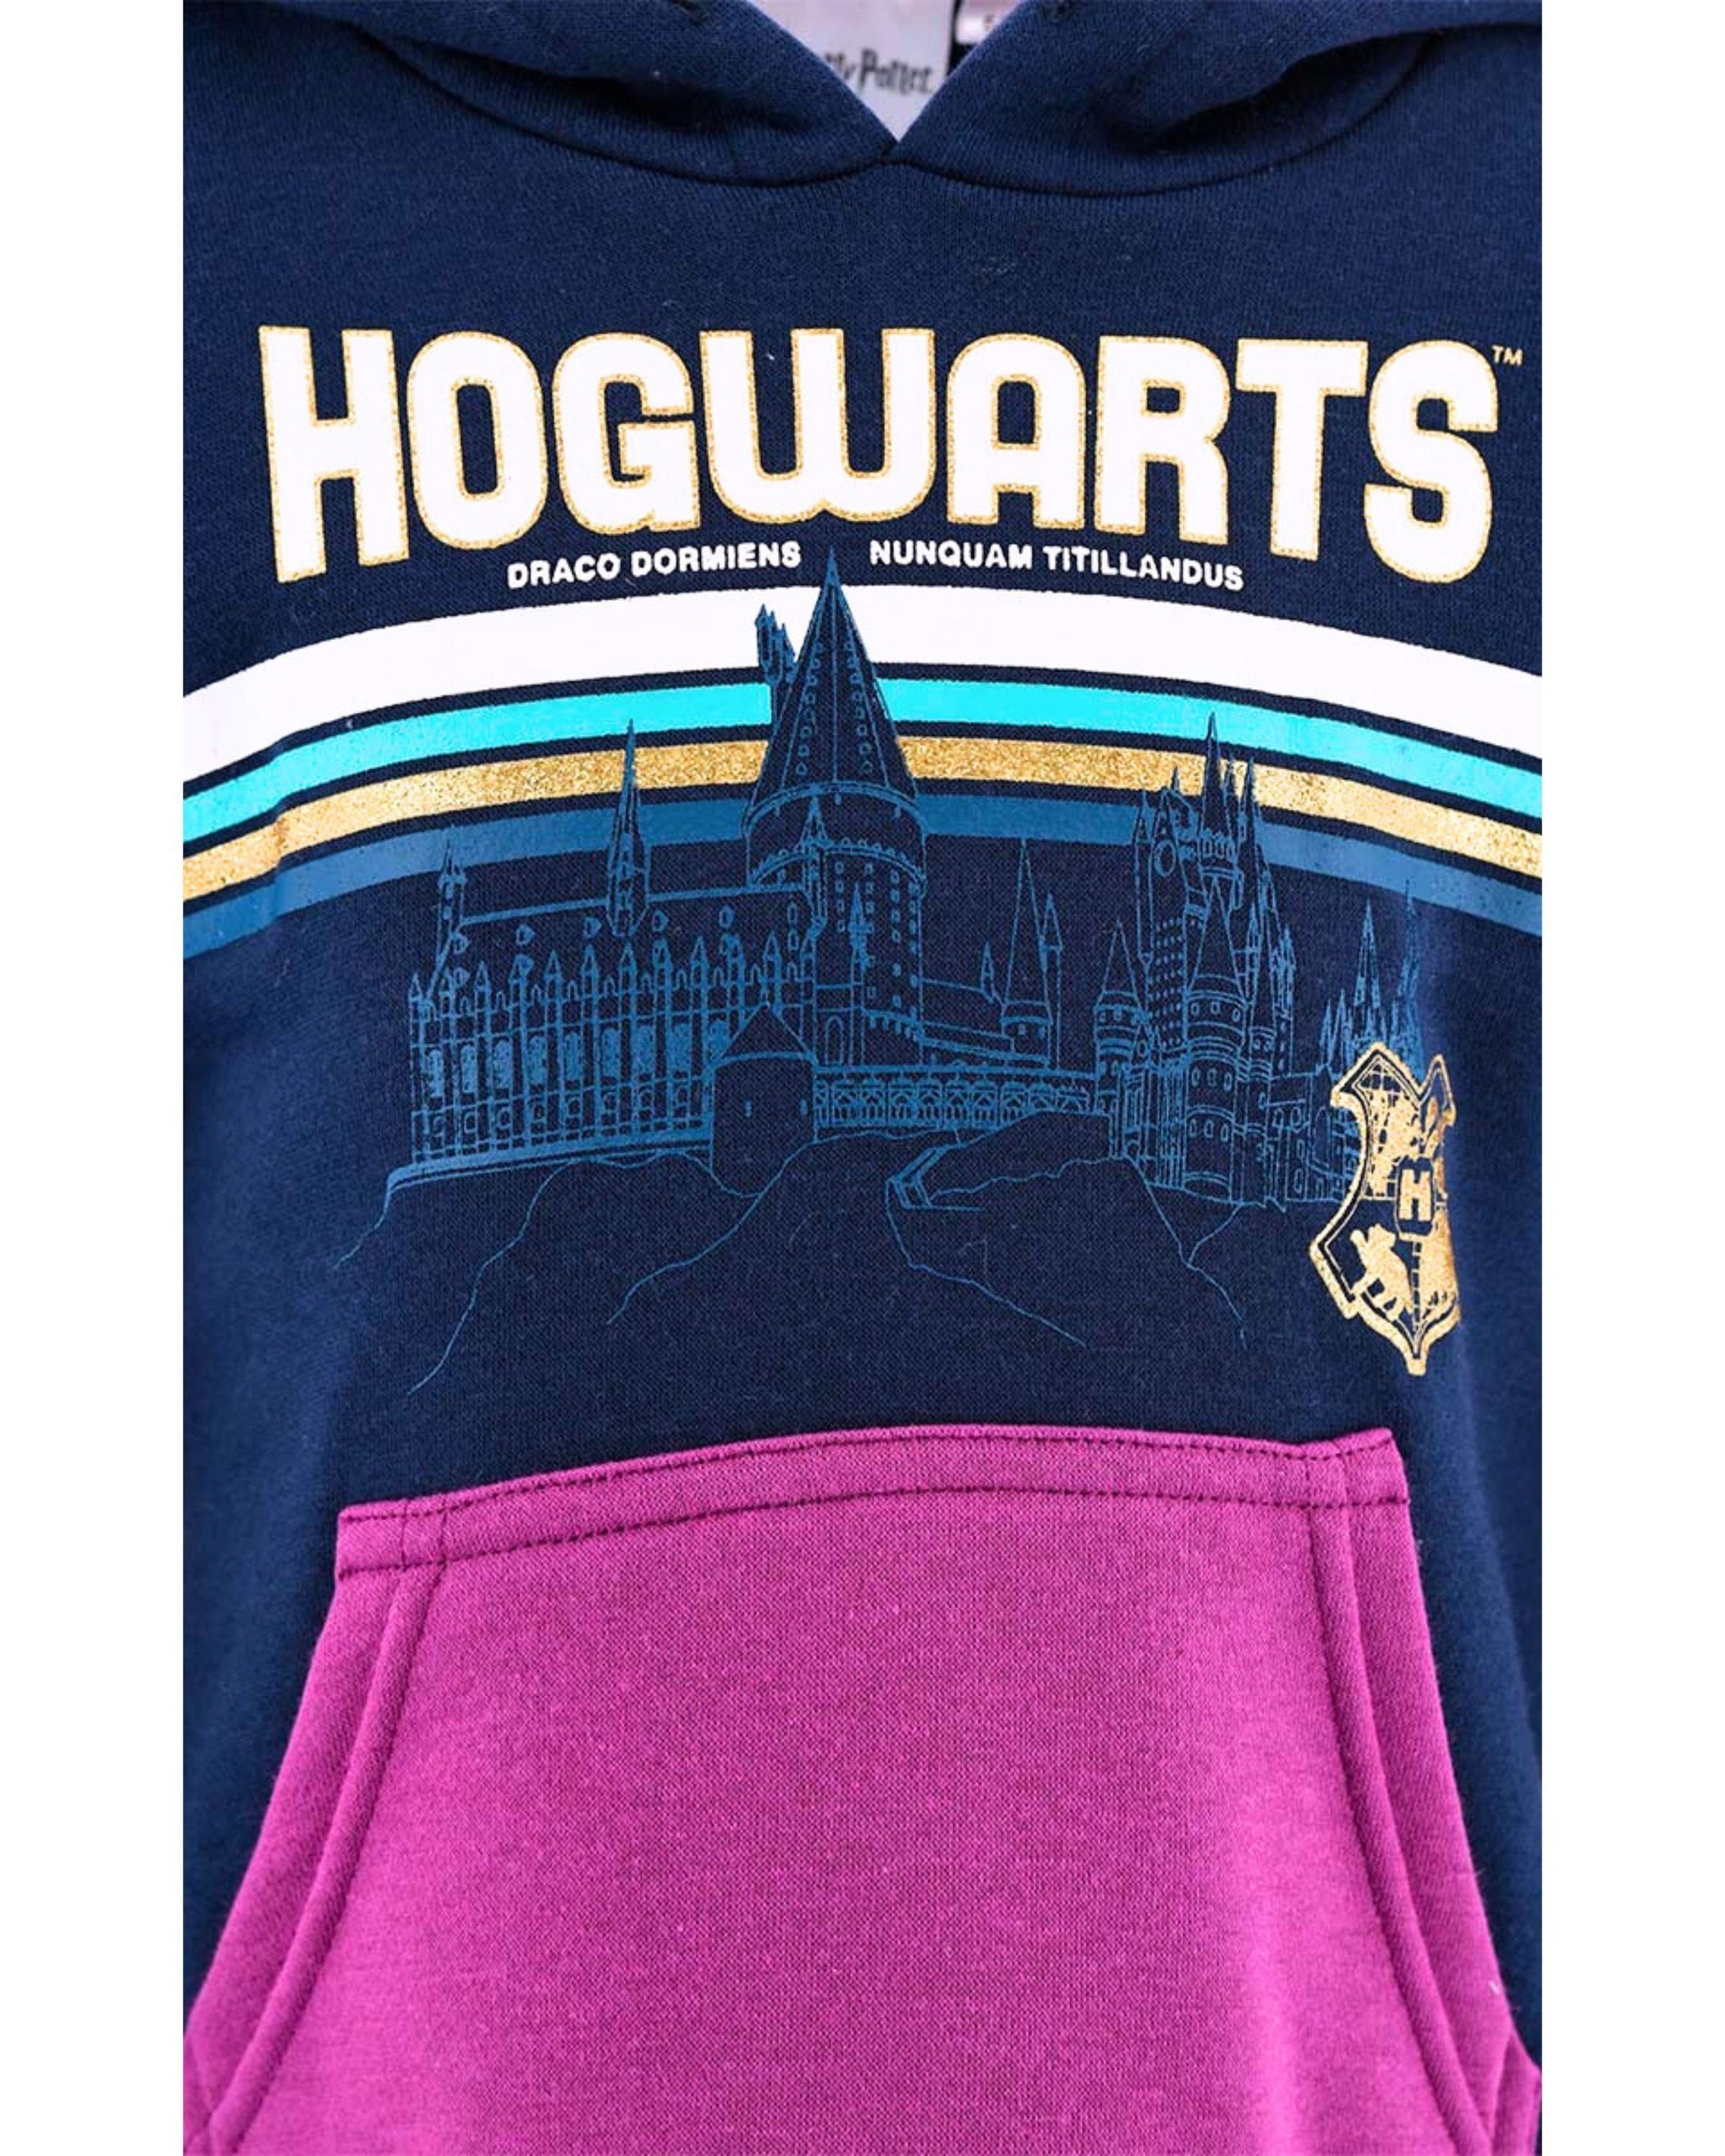 Harry Gr. Potter Hoodie Dunkelblau Hogwarts Kapuzenpullover Mädchen cm 116 152 -